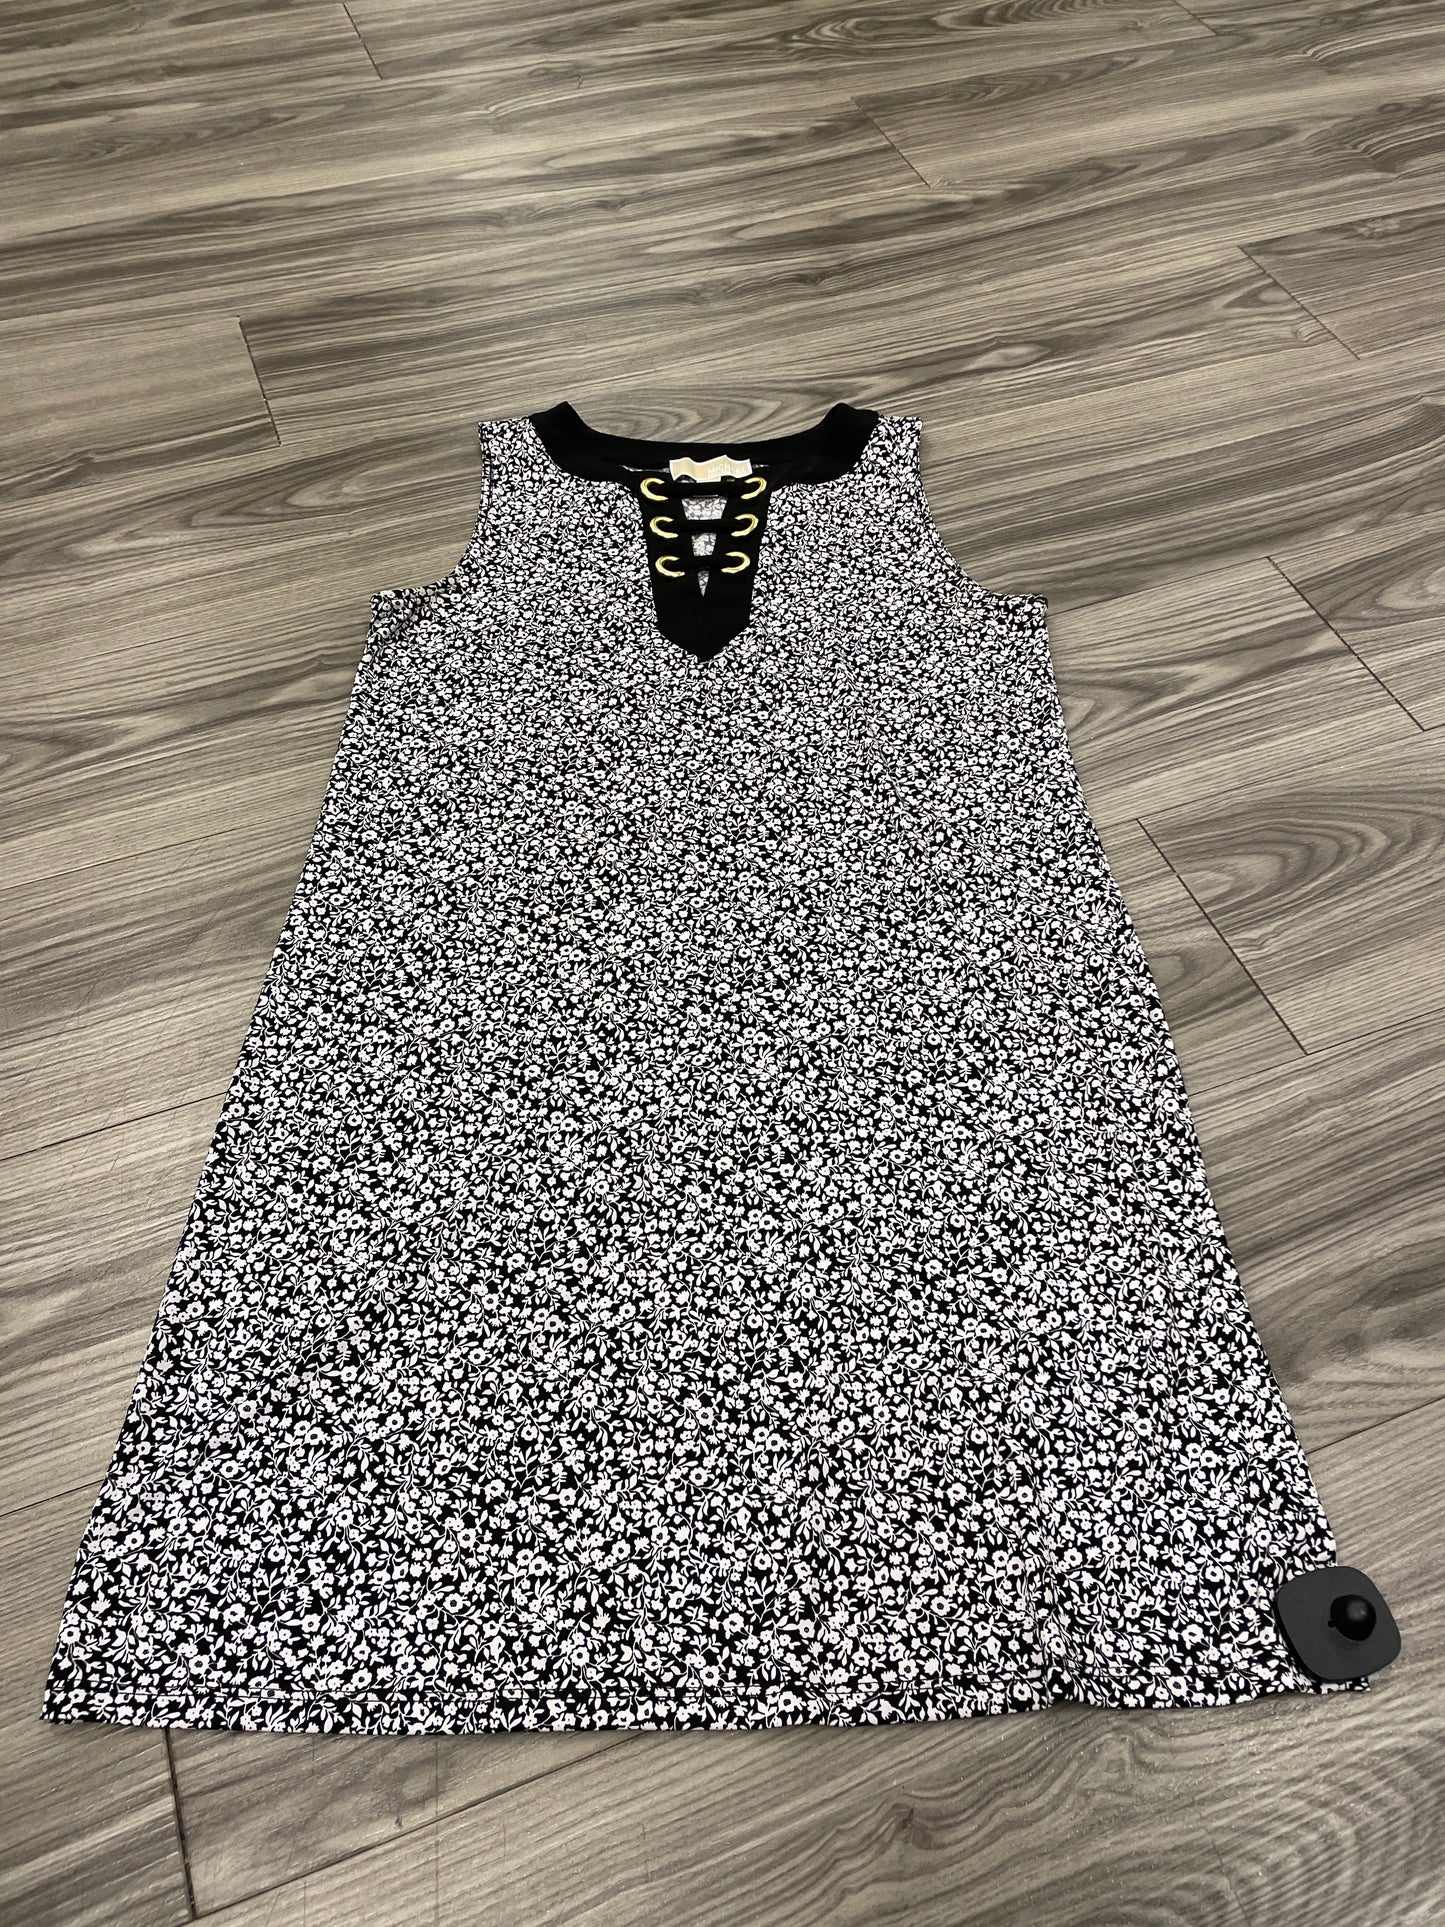 Dress Designer By Michael Kors  Size: M